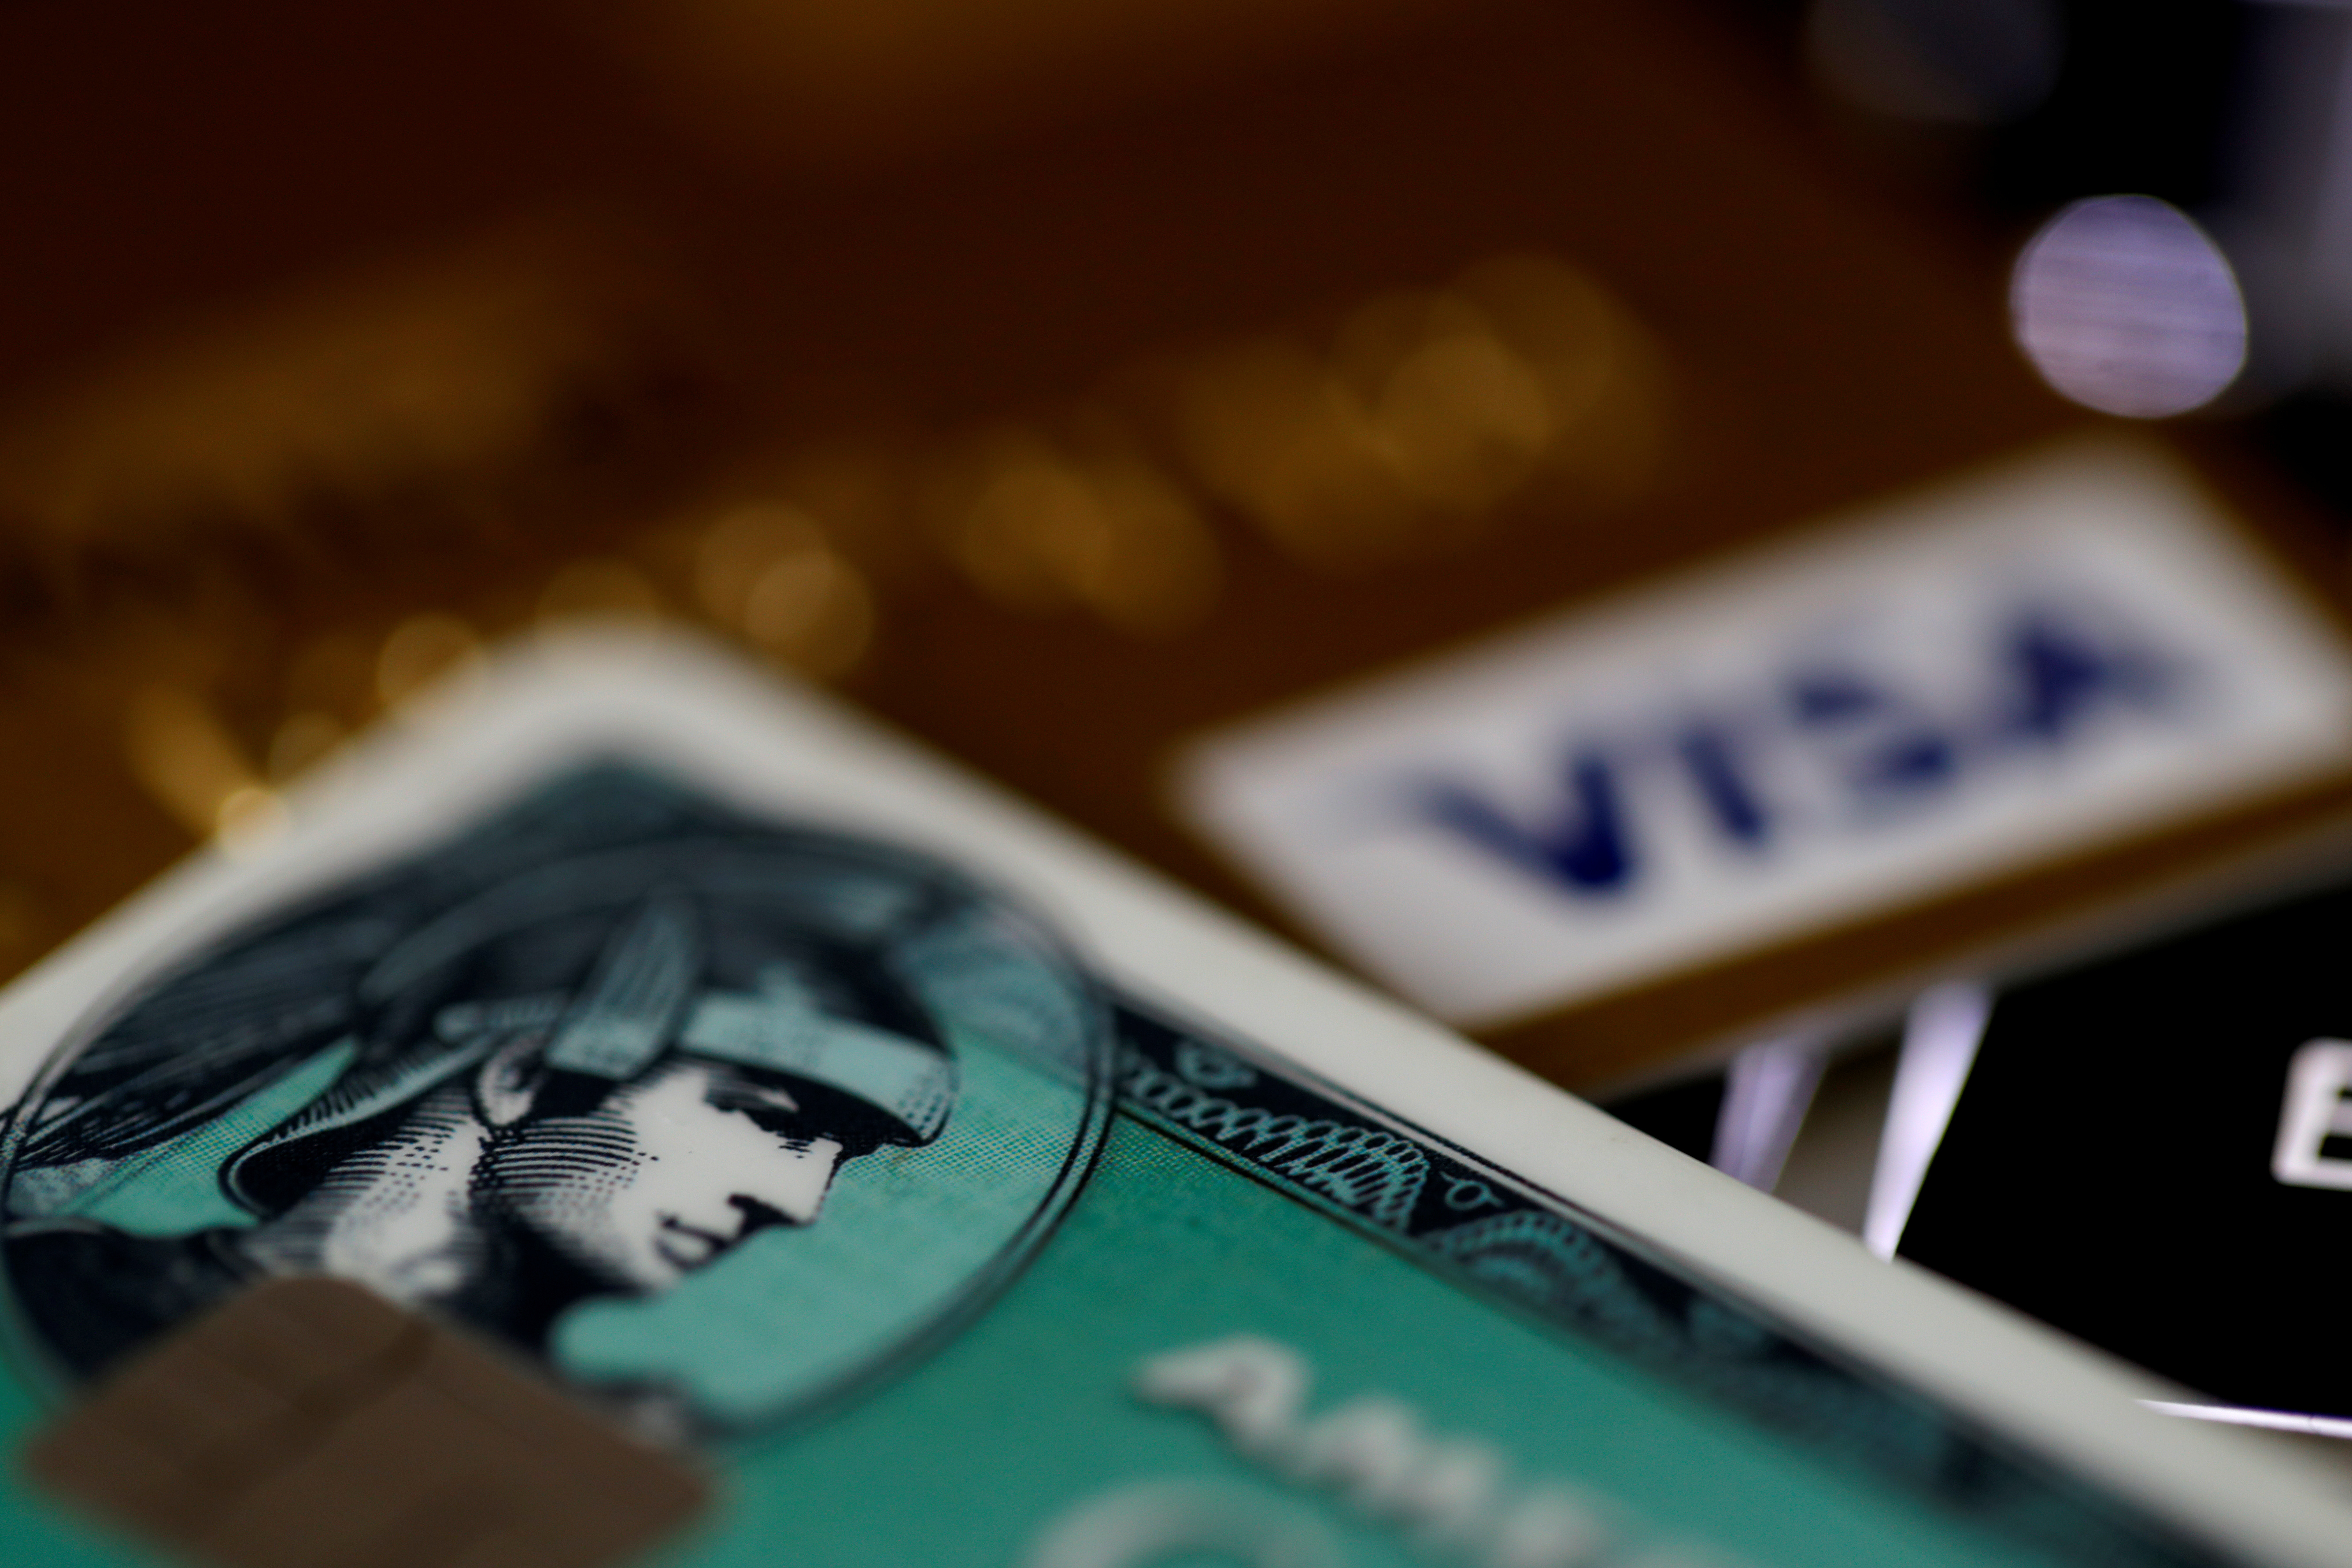 Bigger Credit Risks Take Bigger Bite From Goldman's Apple Card